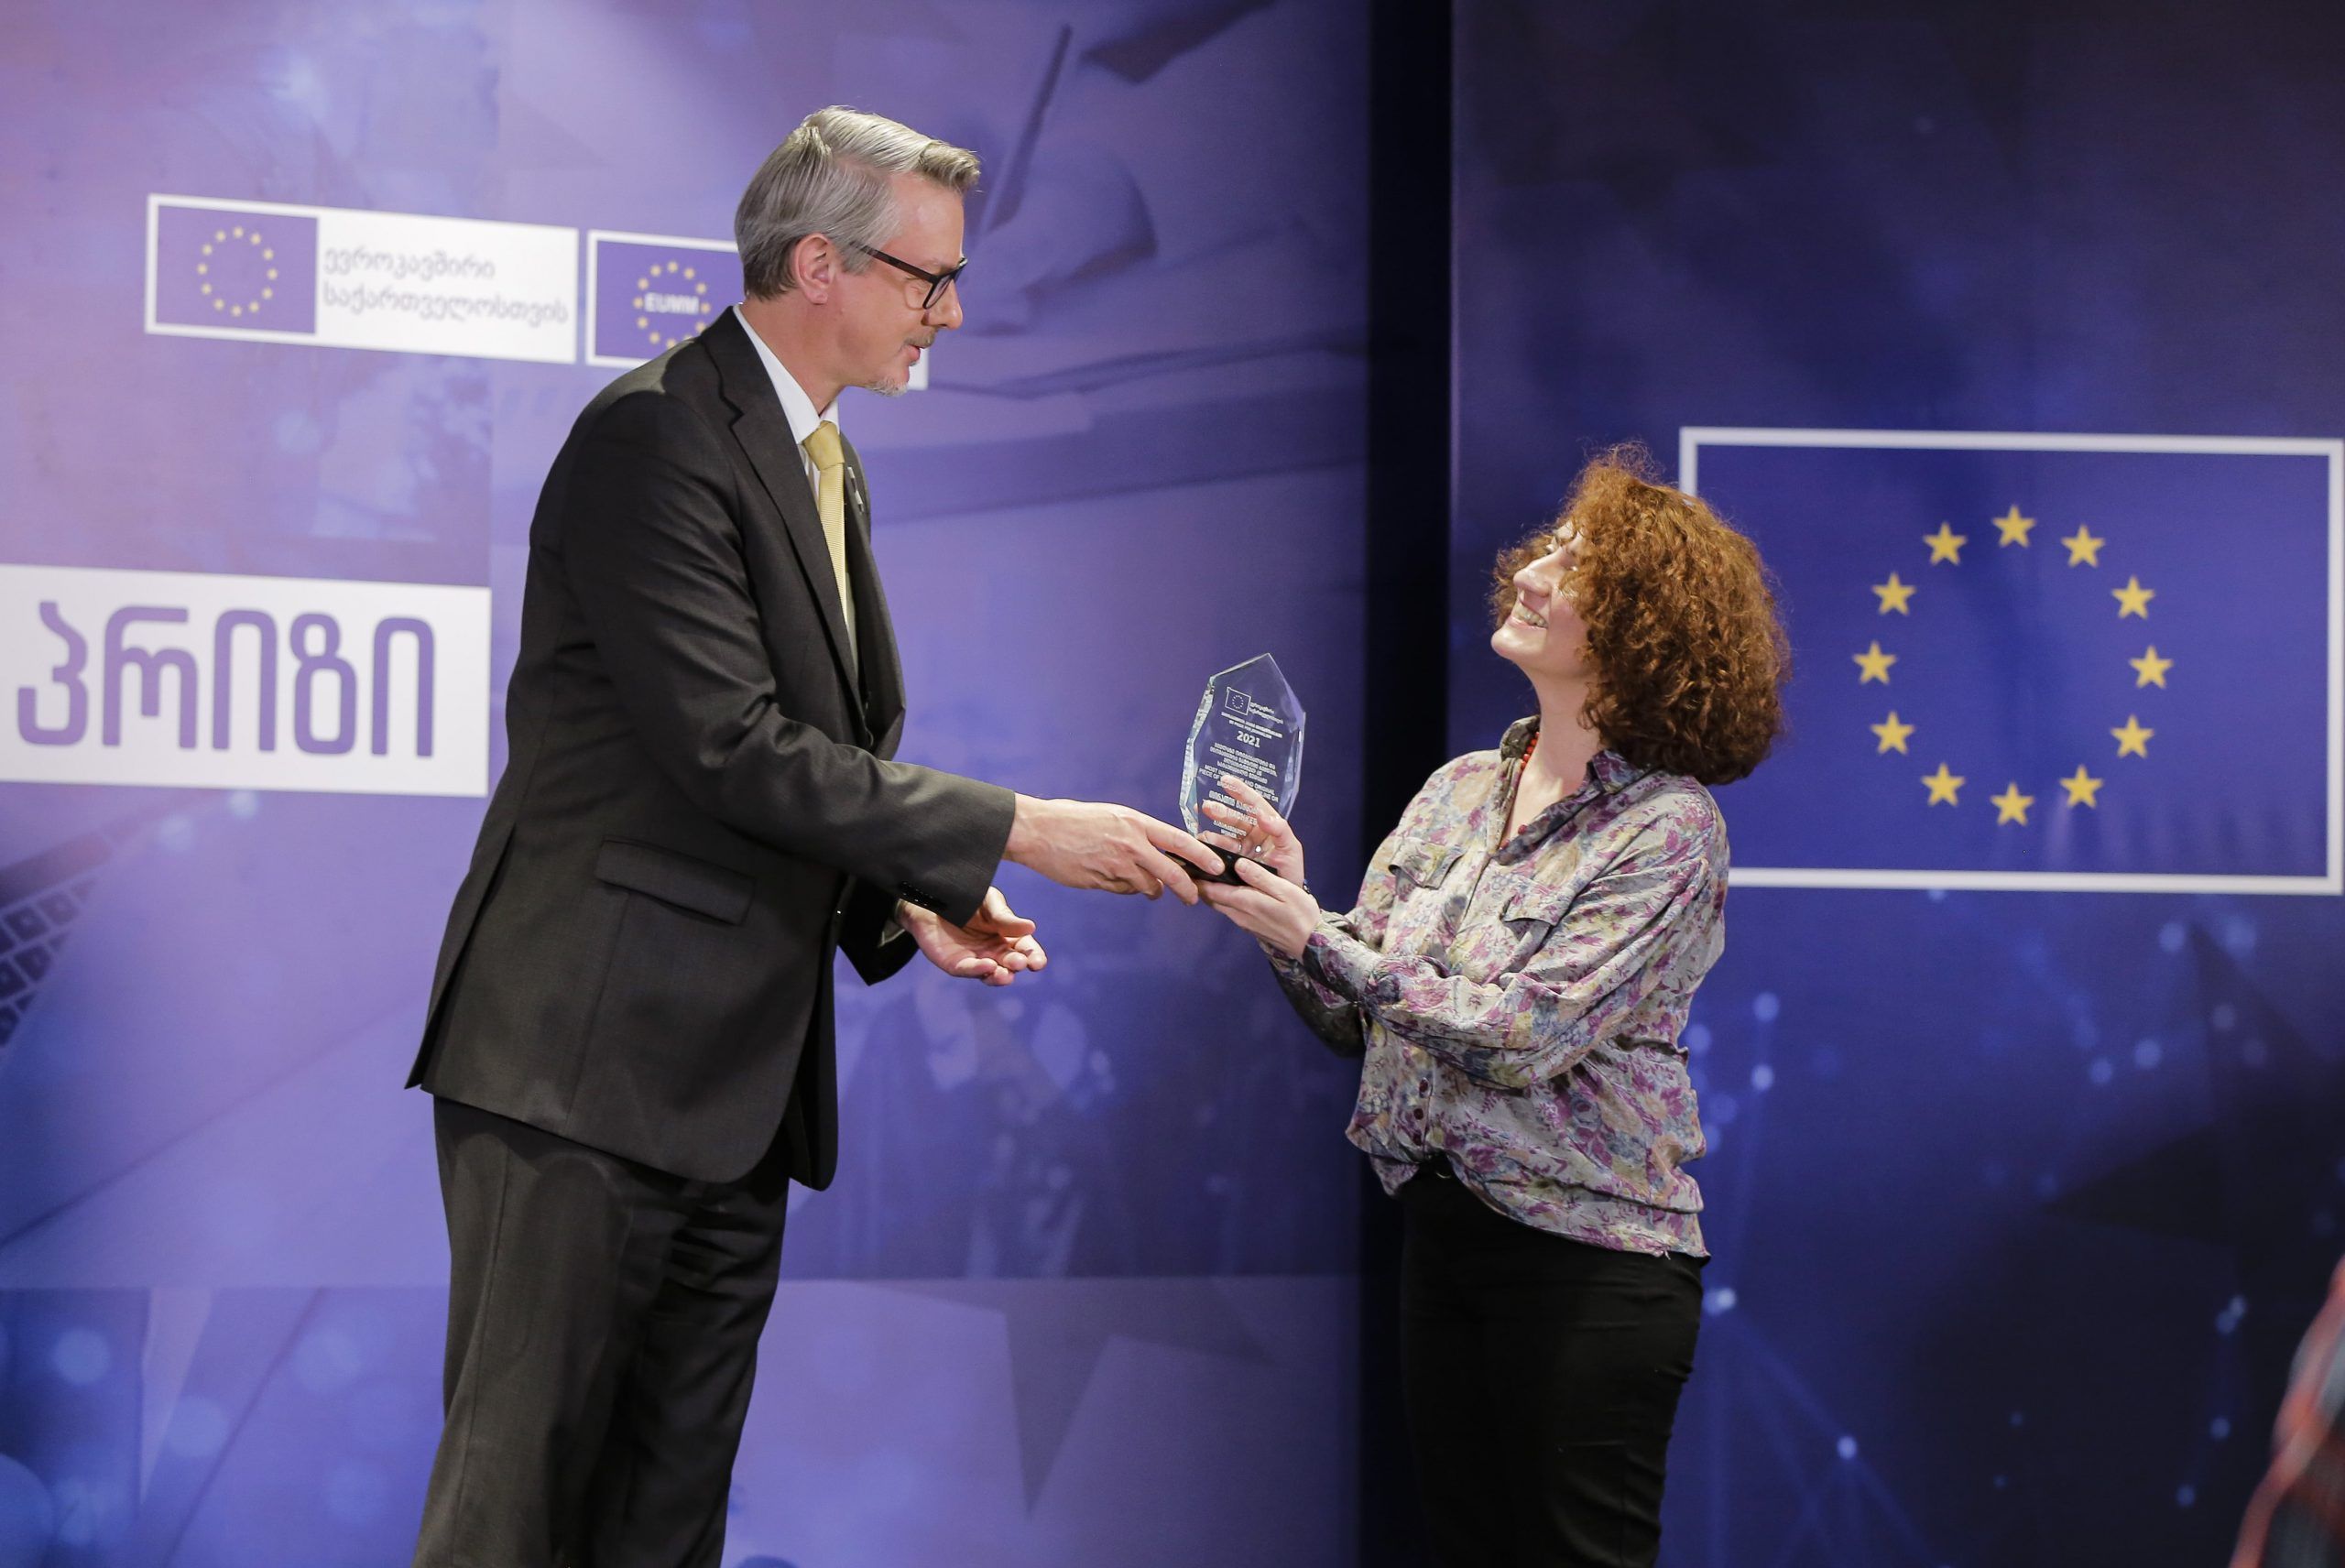 EU Prize for Journalism 2021/ევროკავშირის პრიზი ჟურნალისტიკაში 2021